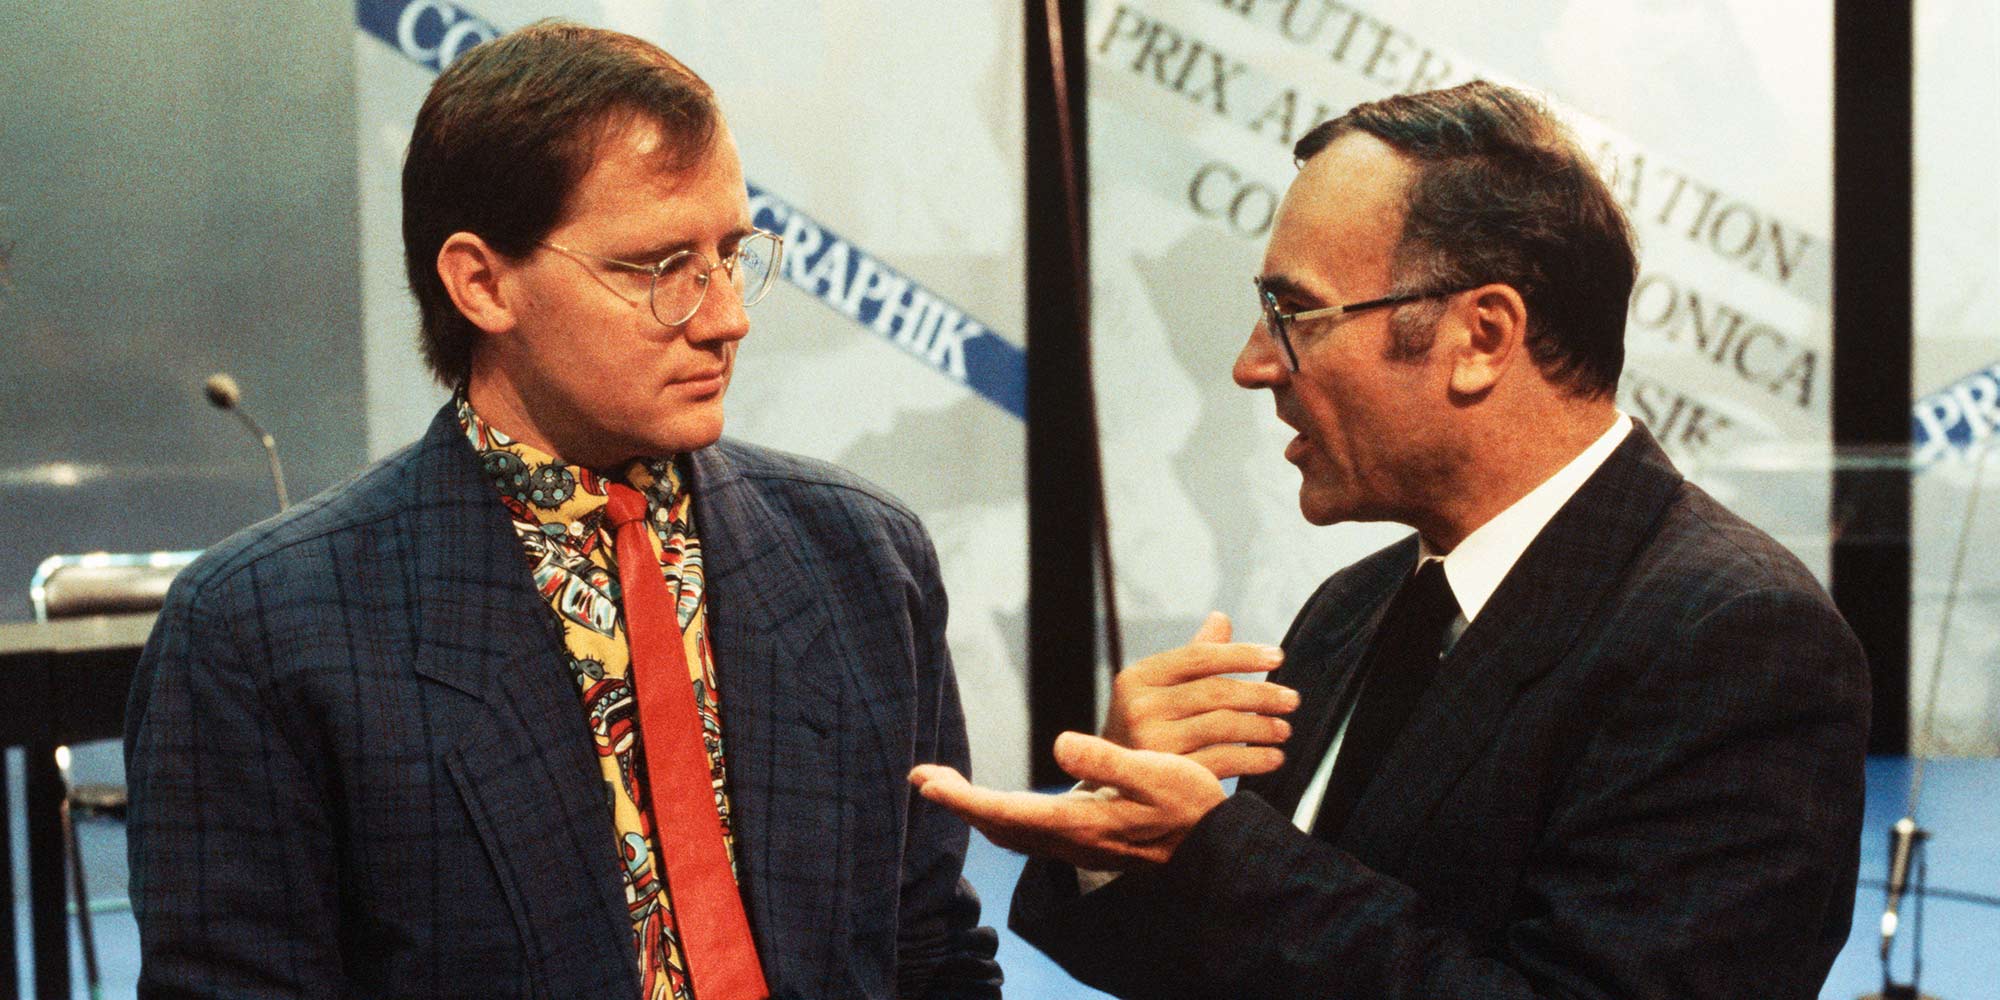 1987: Hannes Leopoldseder with John Lasseter